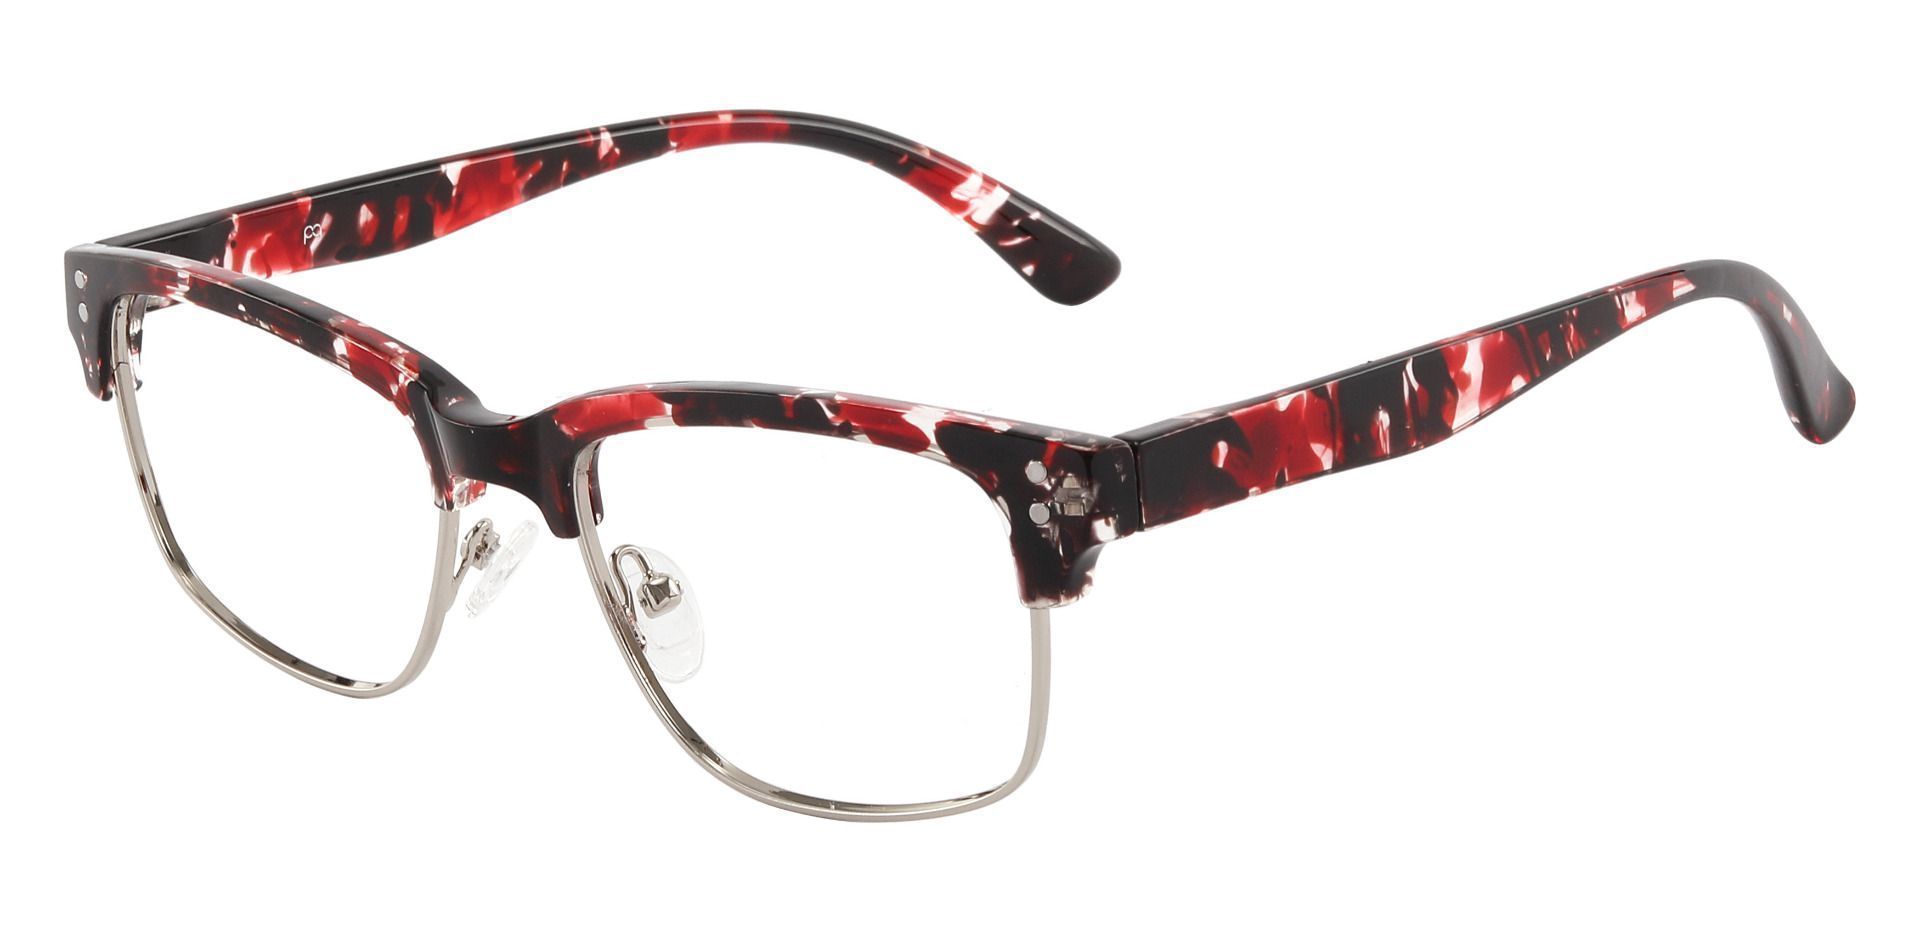 Burnett Browline Prescription Glasses - Red